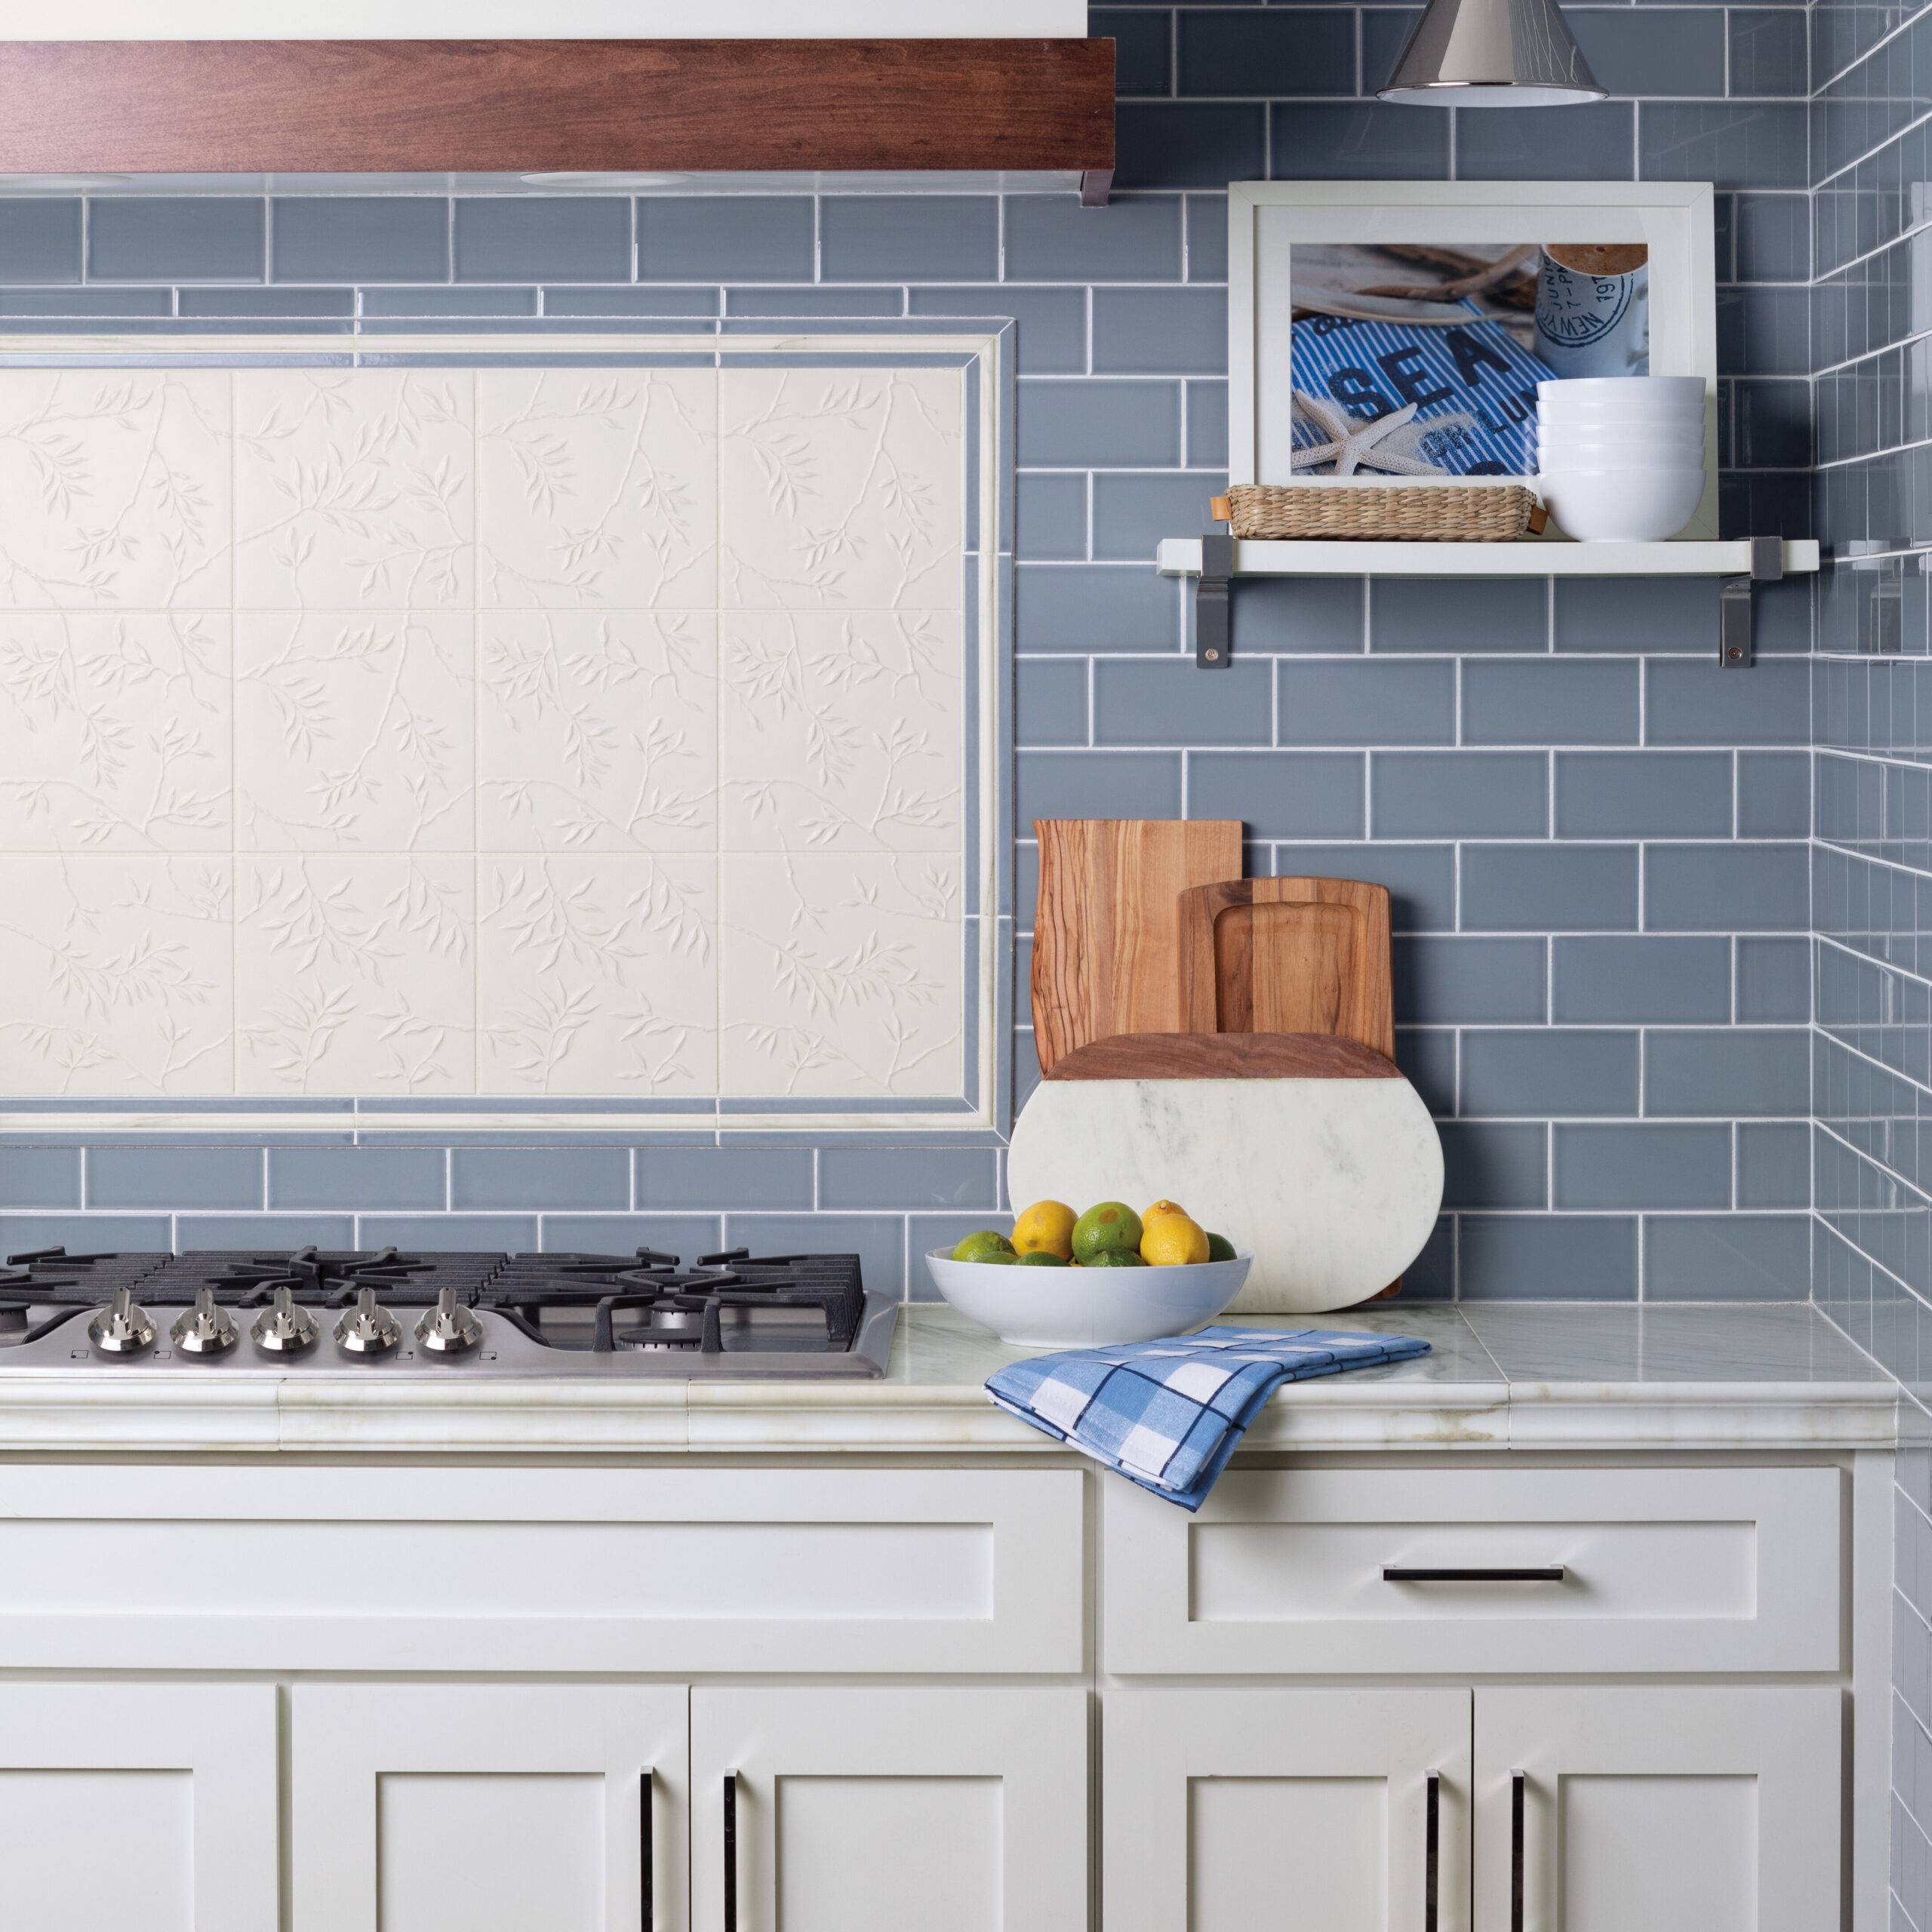 Marble counter top with blue ceramic tile backsplash with framed accent tile above range top.